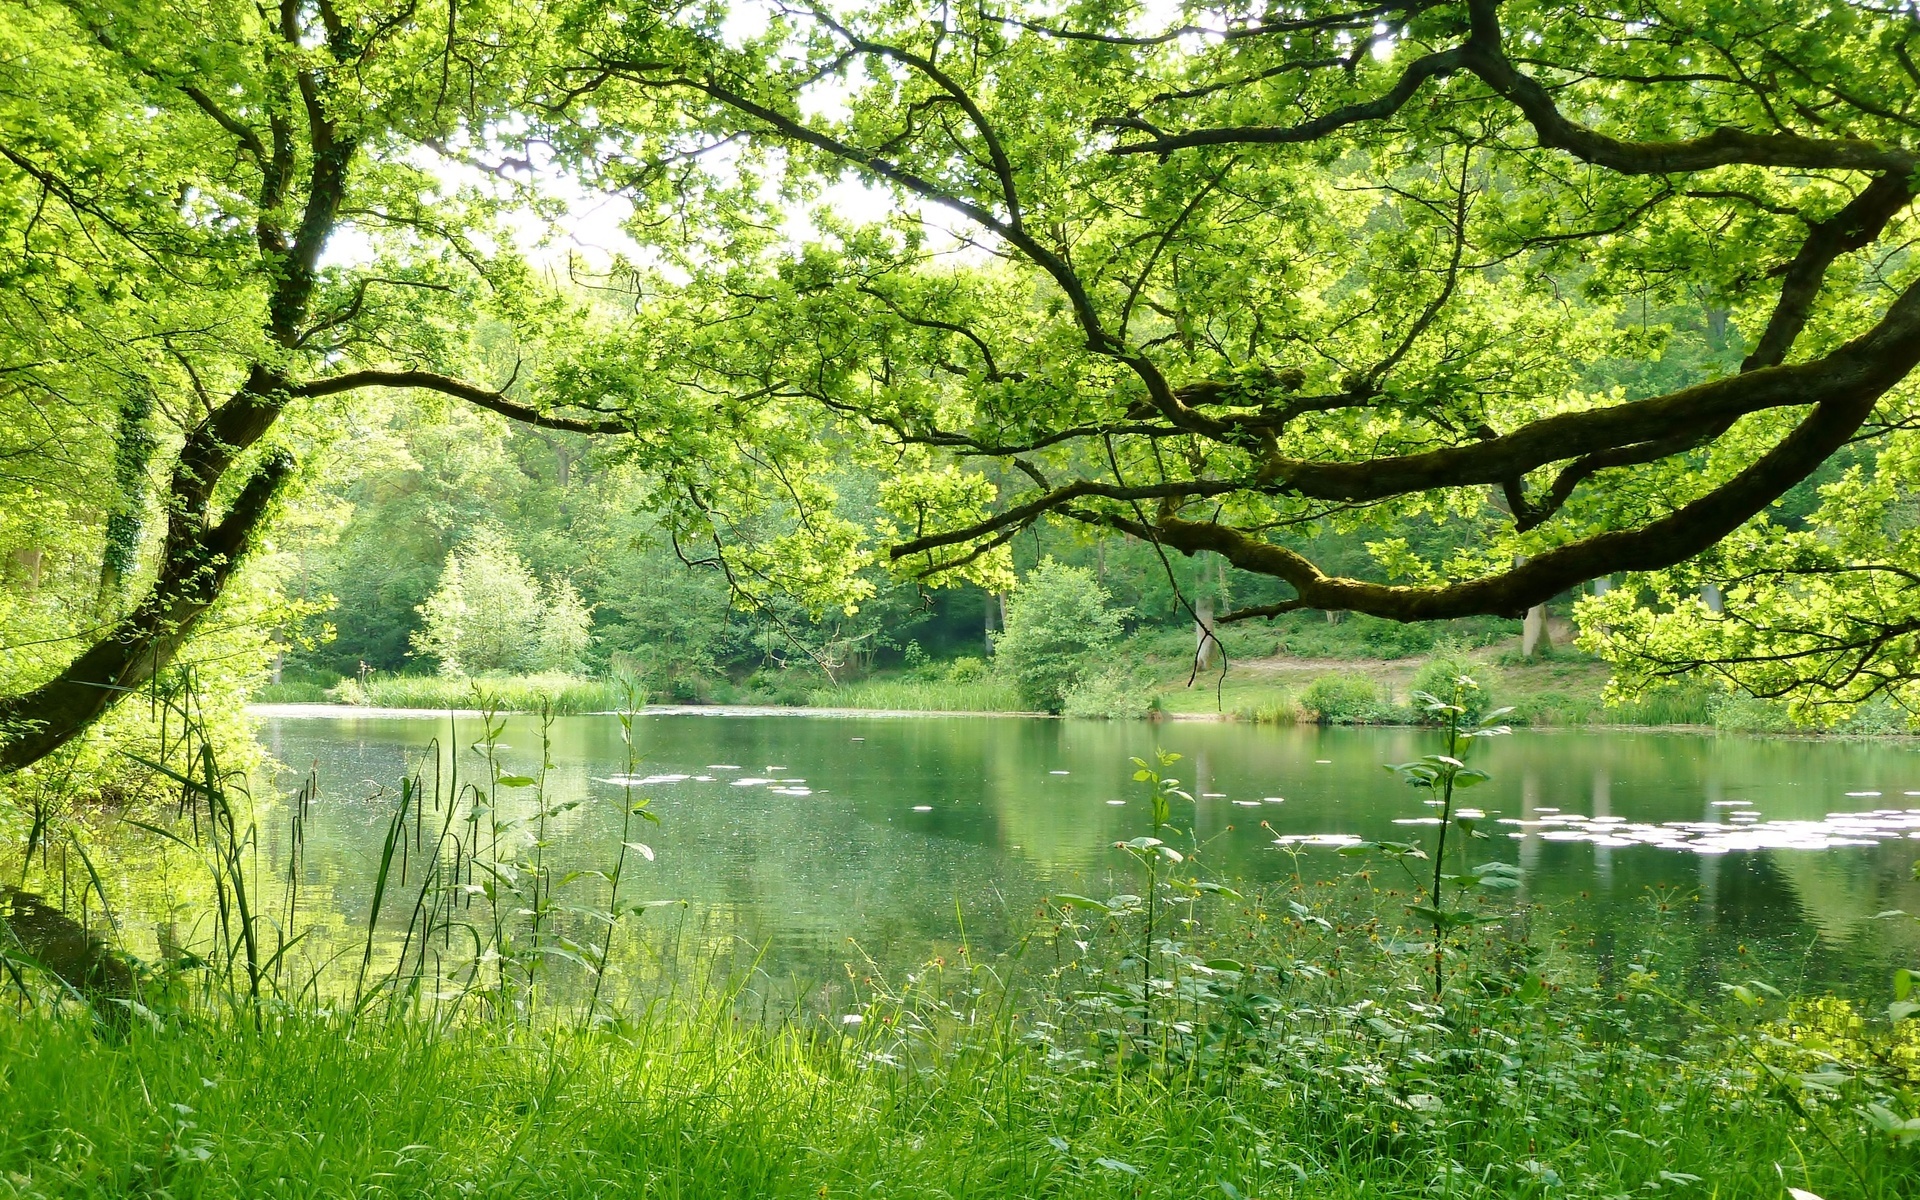 Картинка: Деревья, лес, речка, зелень, лето, трава, вода